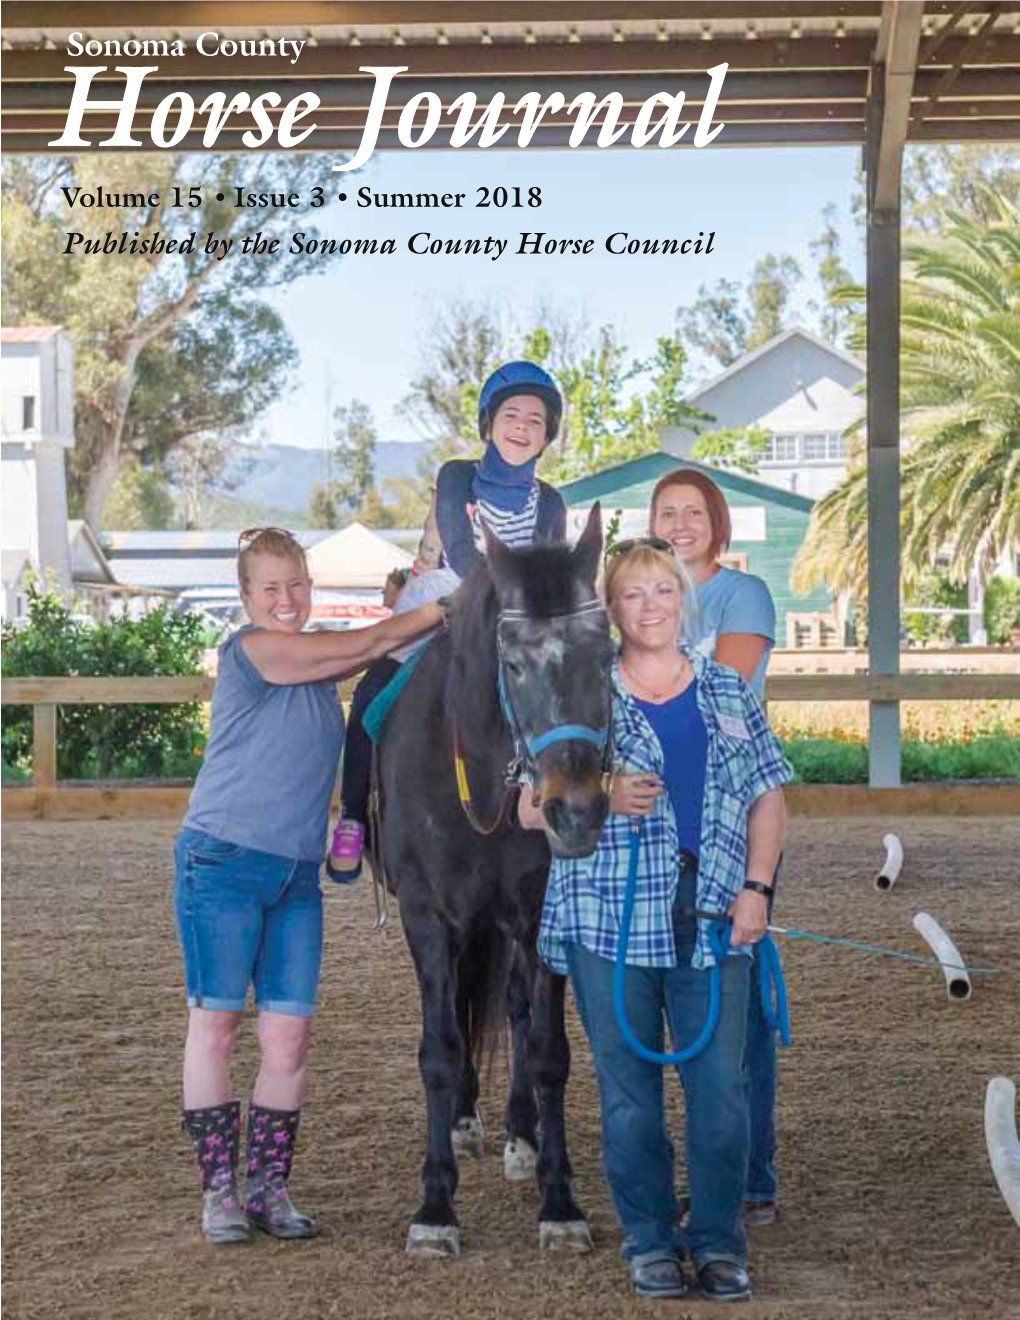 Sonoma County Horsevolume 15 • Issue 3 • Summer 2018 Journalsonoma County Horse Journal Volume 15 • Issue 3 • Summer 2018 Published by the Sonoma County Horse Council